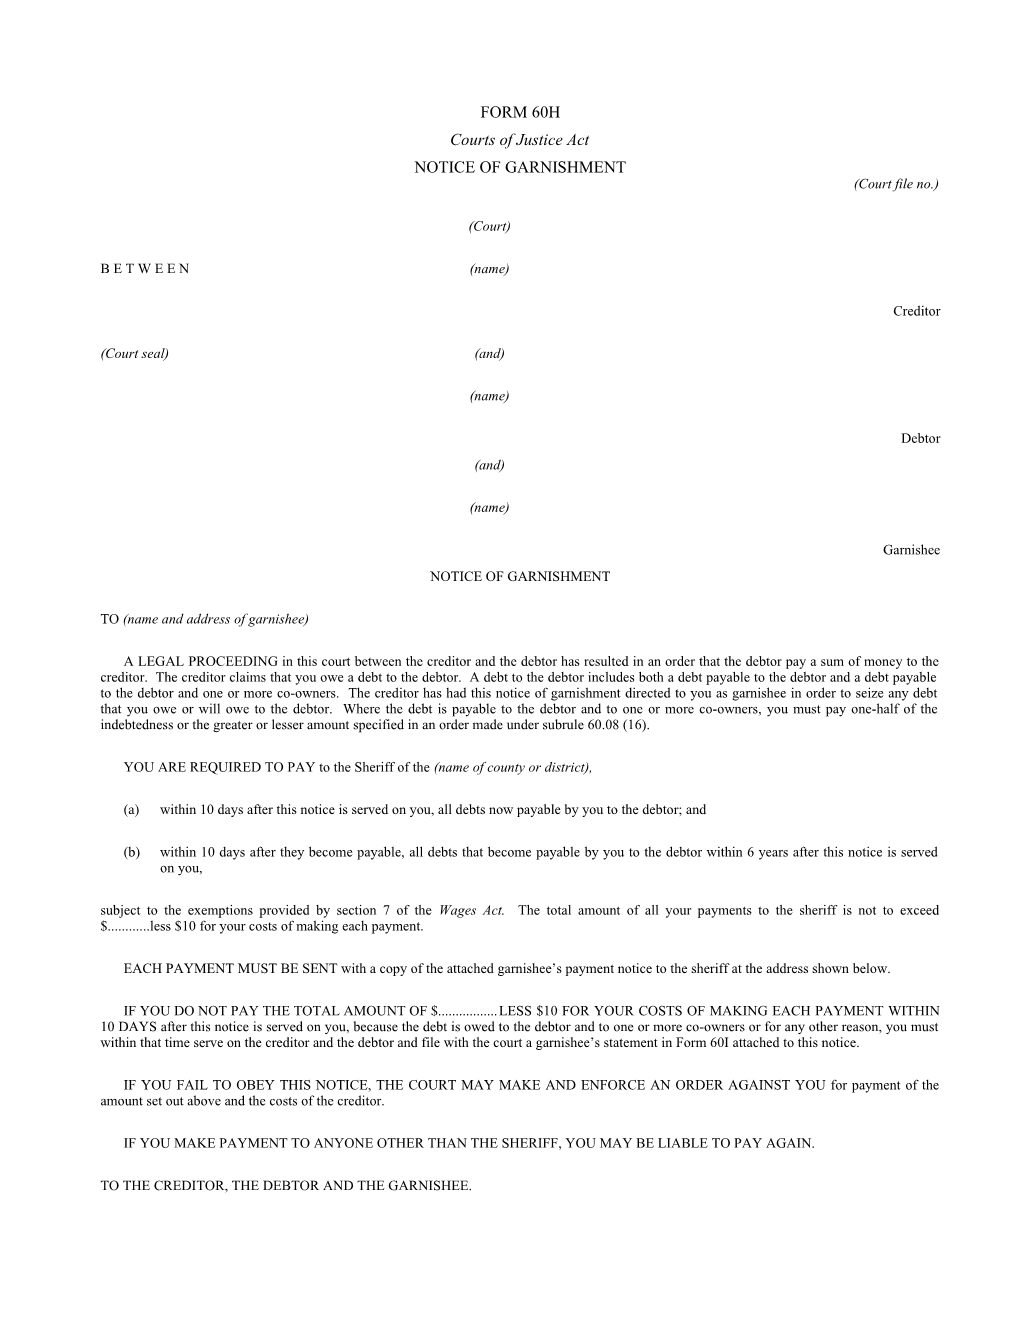 Form 60H Notice of Garnishment